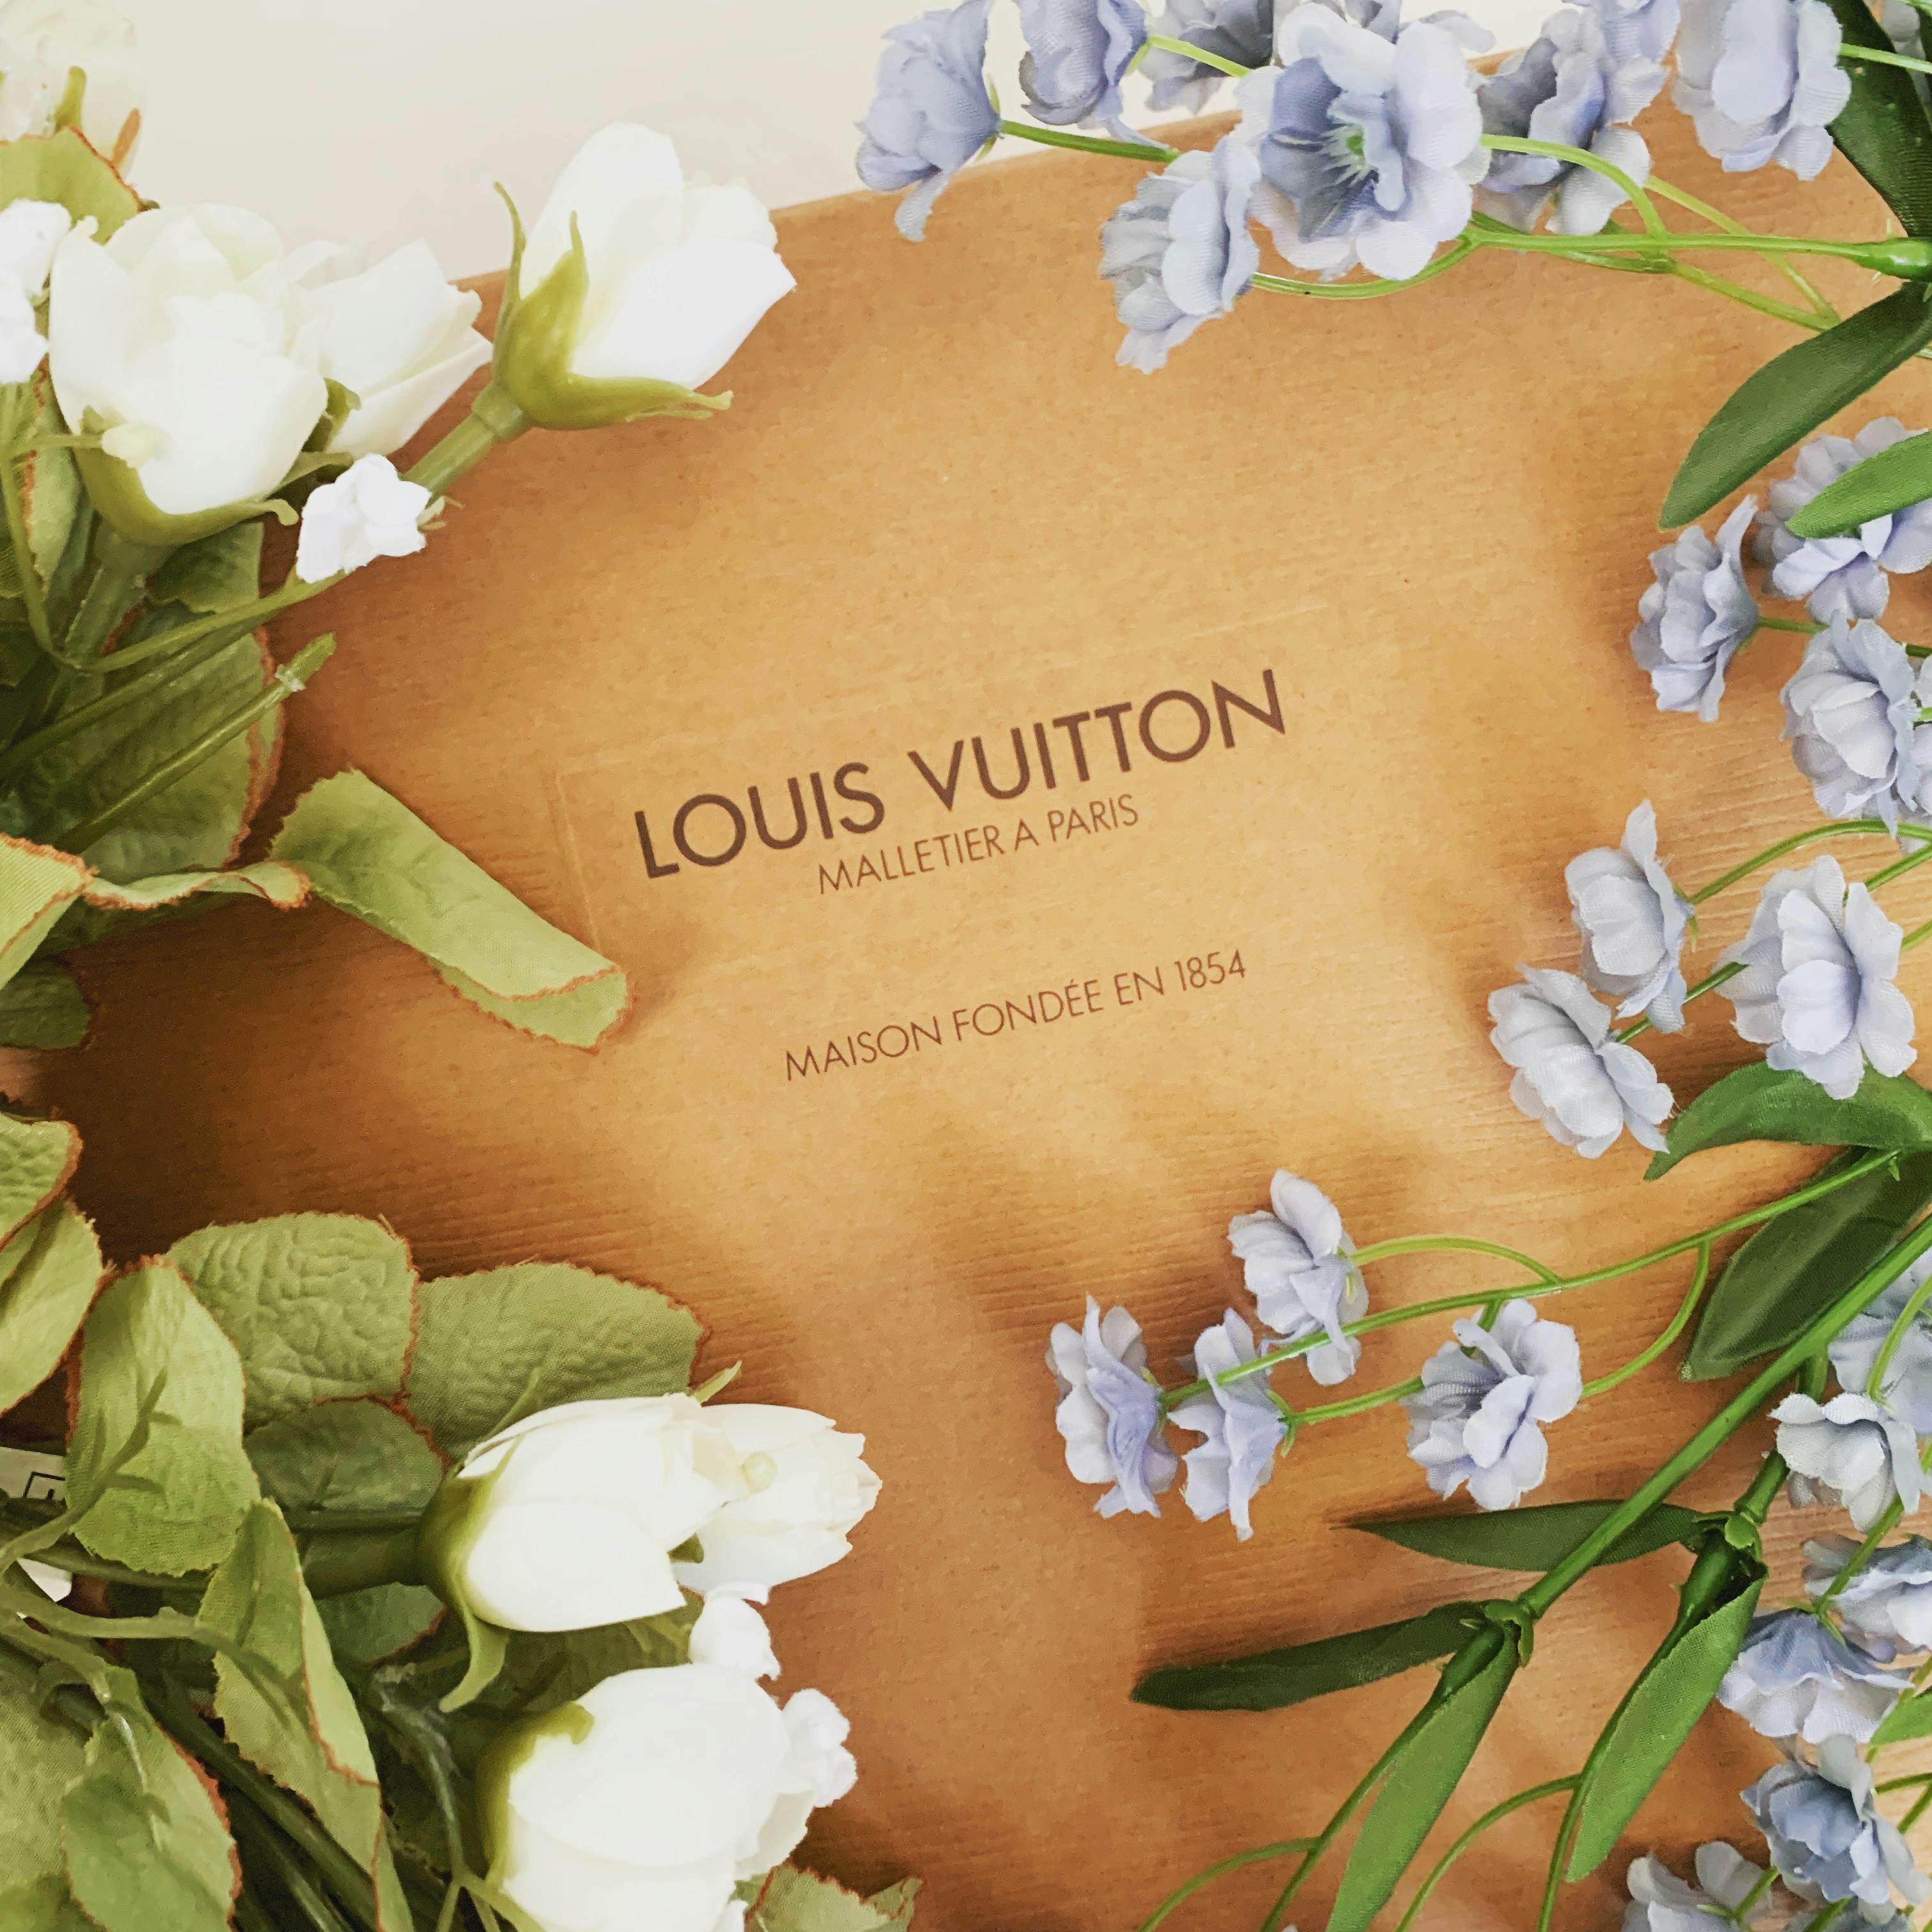 Louis Vuitton Gift Box Malletier A Paris Maison Fondee En 1854 w